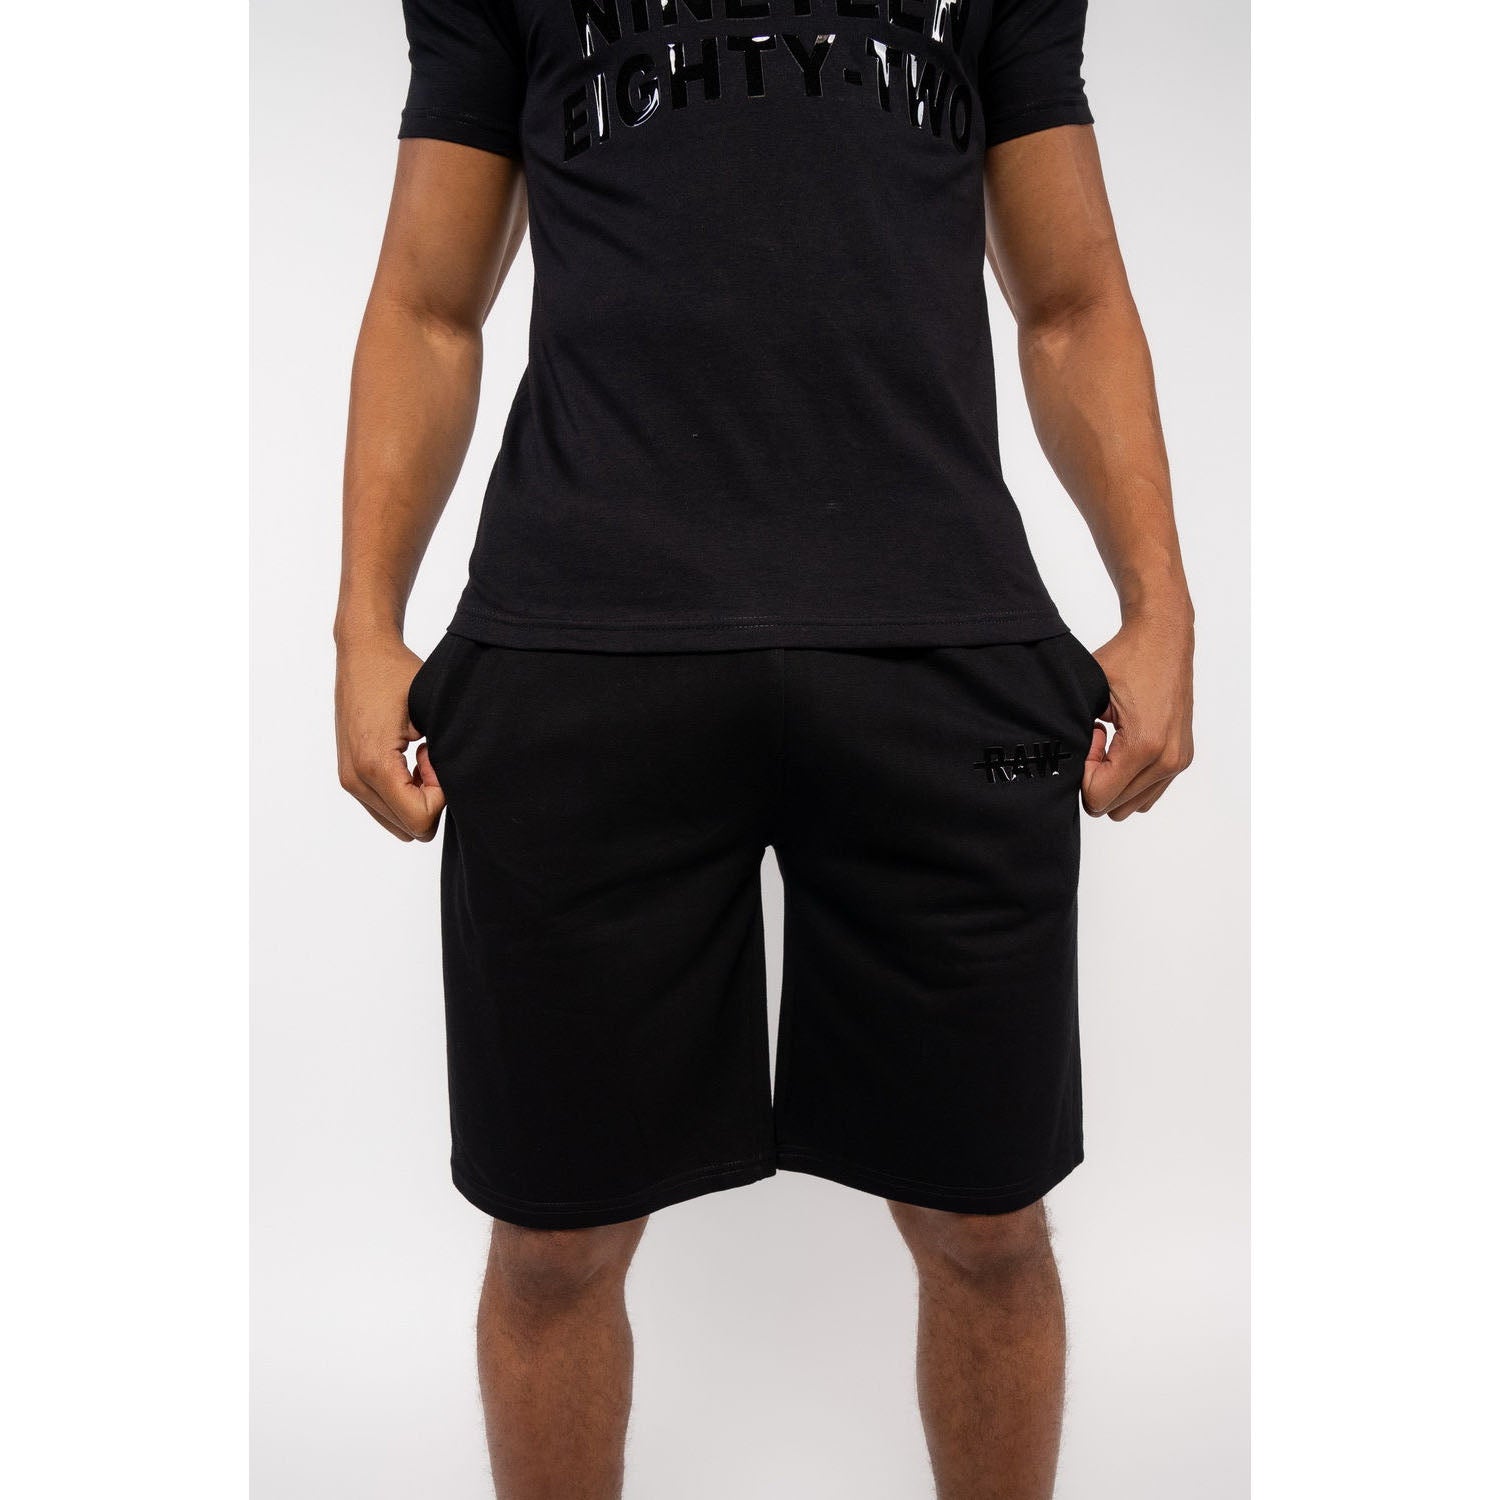 Men The Original -RAW- Black Silicone Cotton Shorts - Rawyalty Clothing